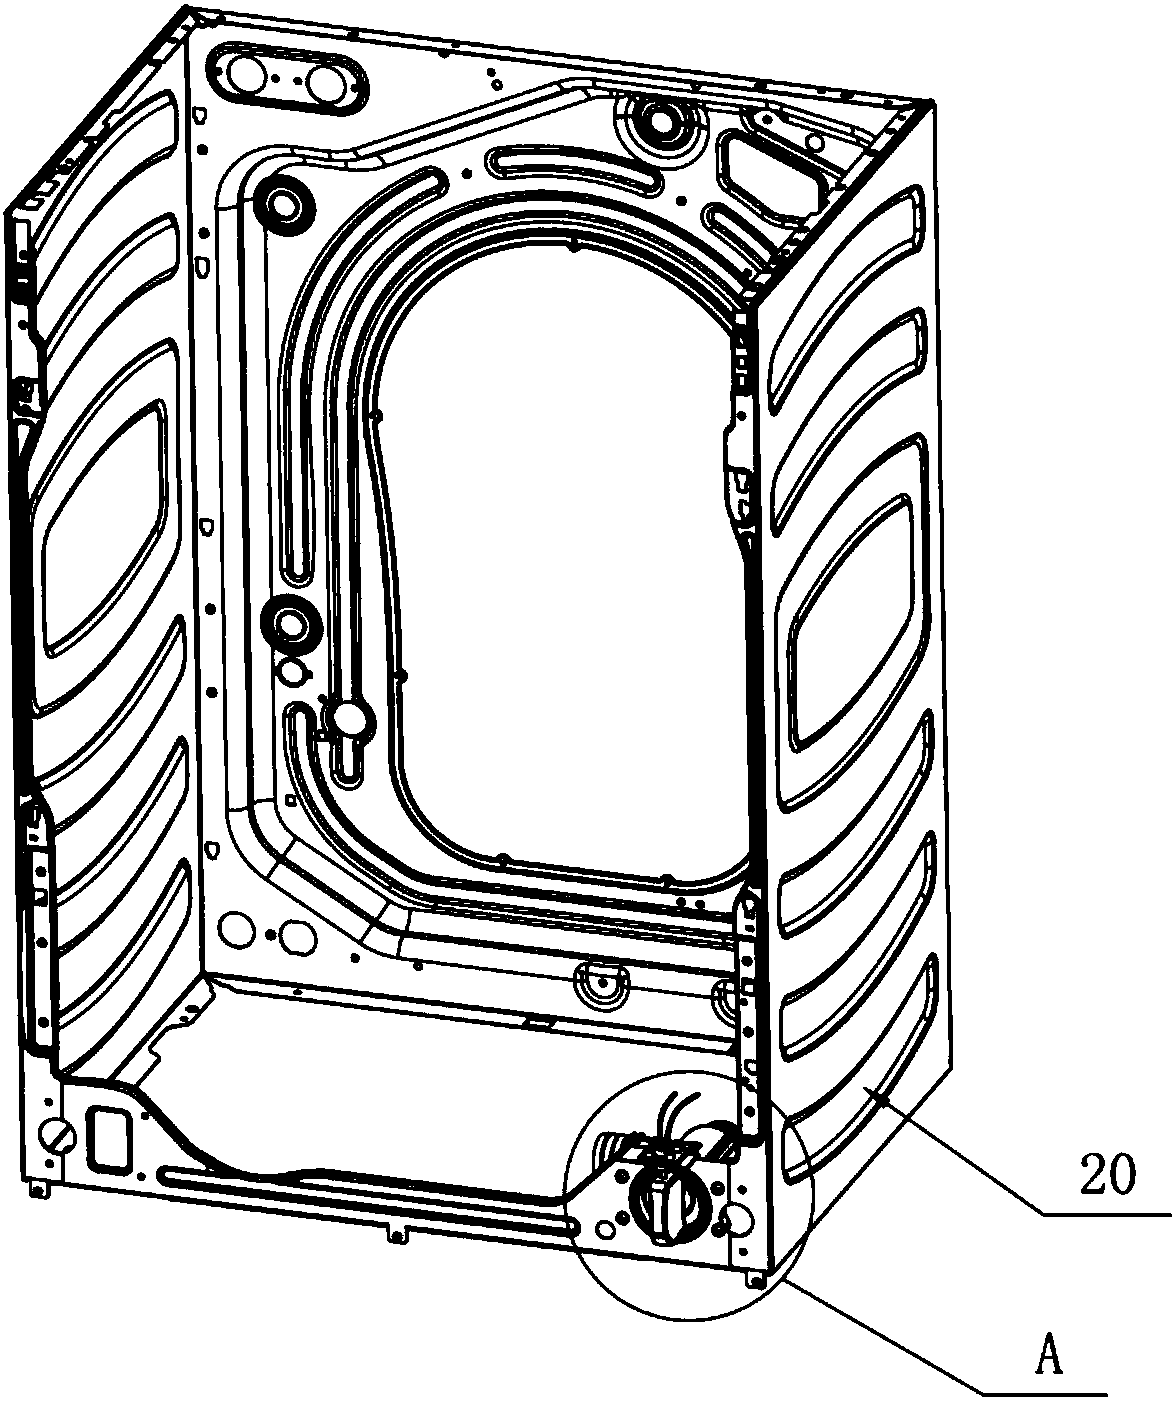 Thread chip filter locking structure and washing machine